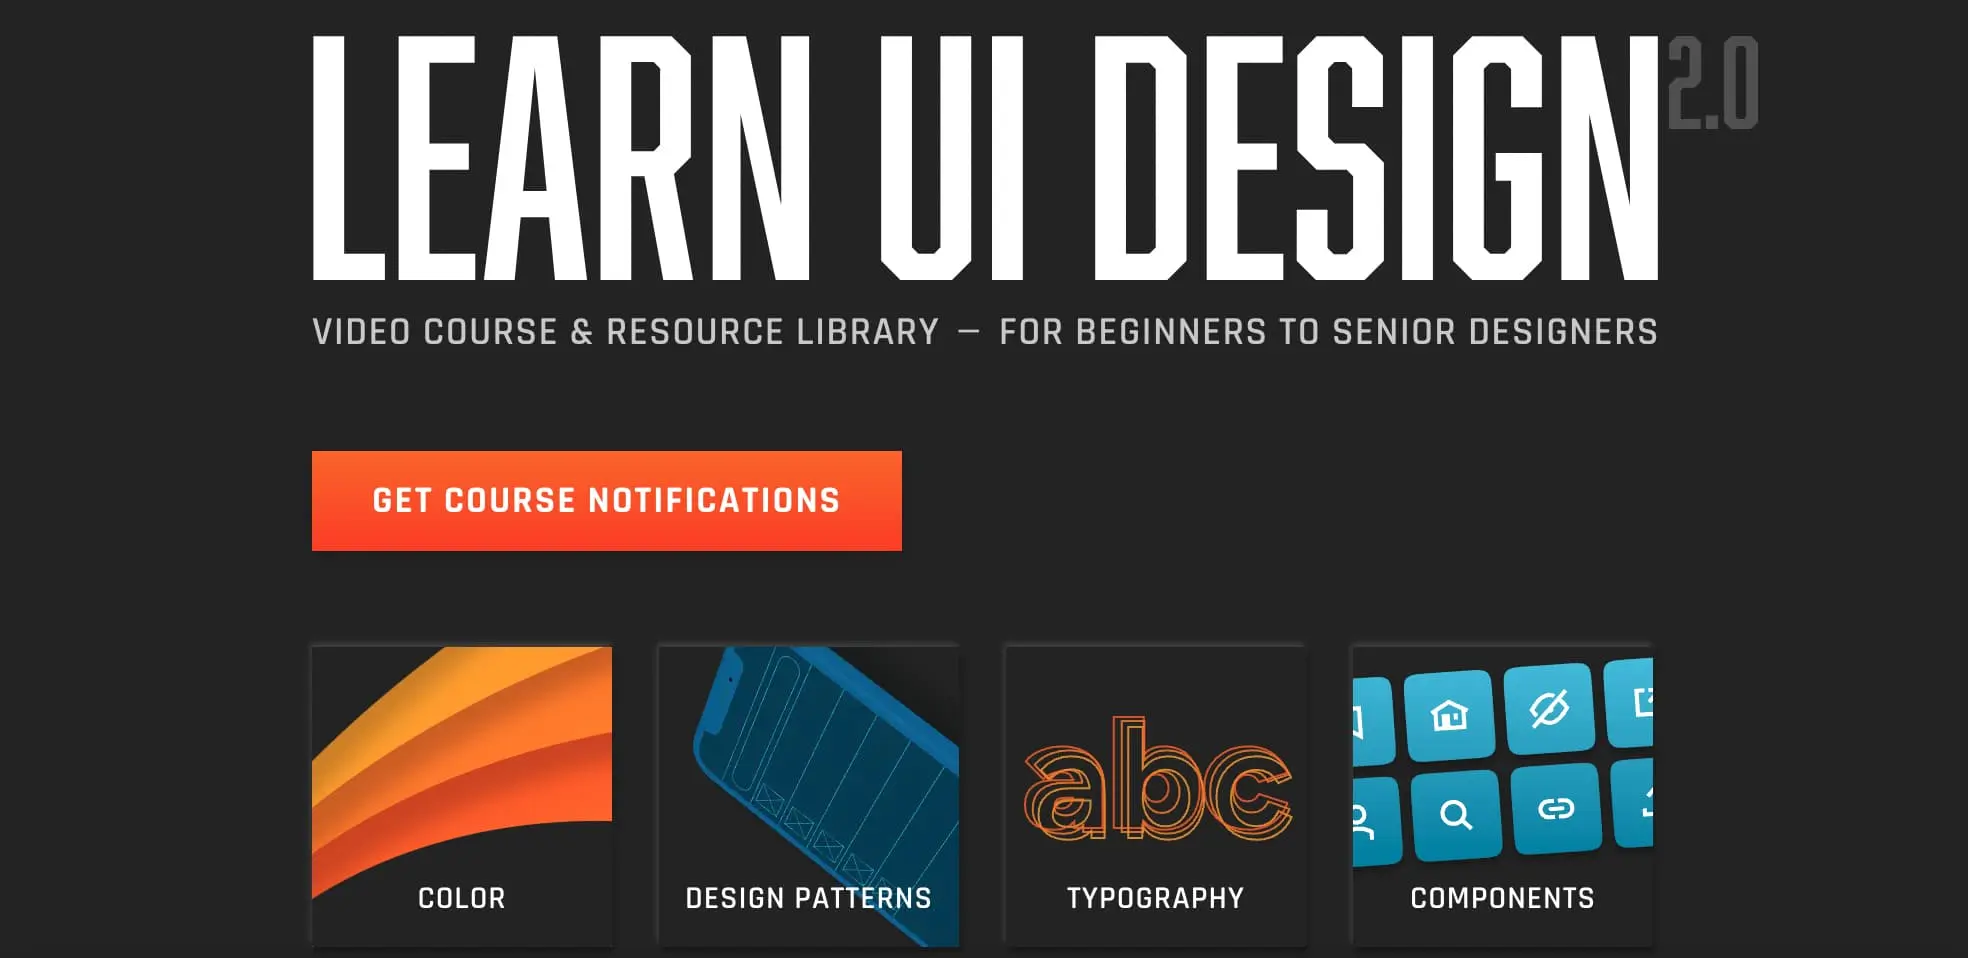 A screenshot from the Lear UI design certification website